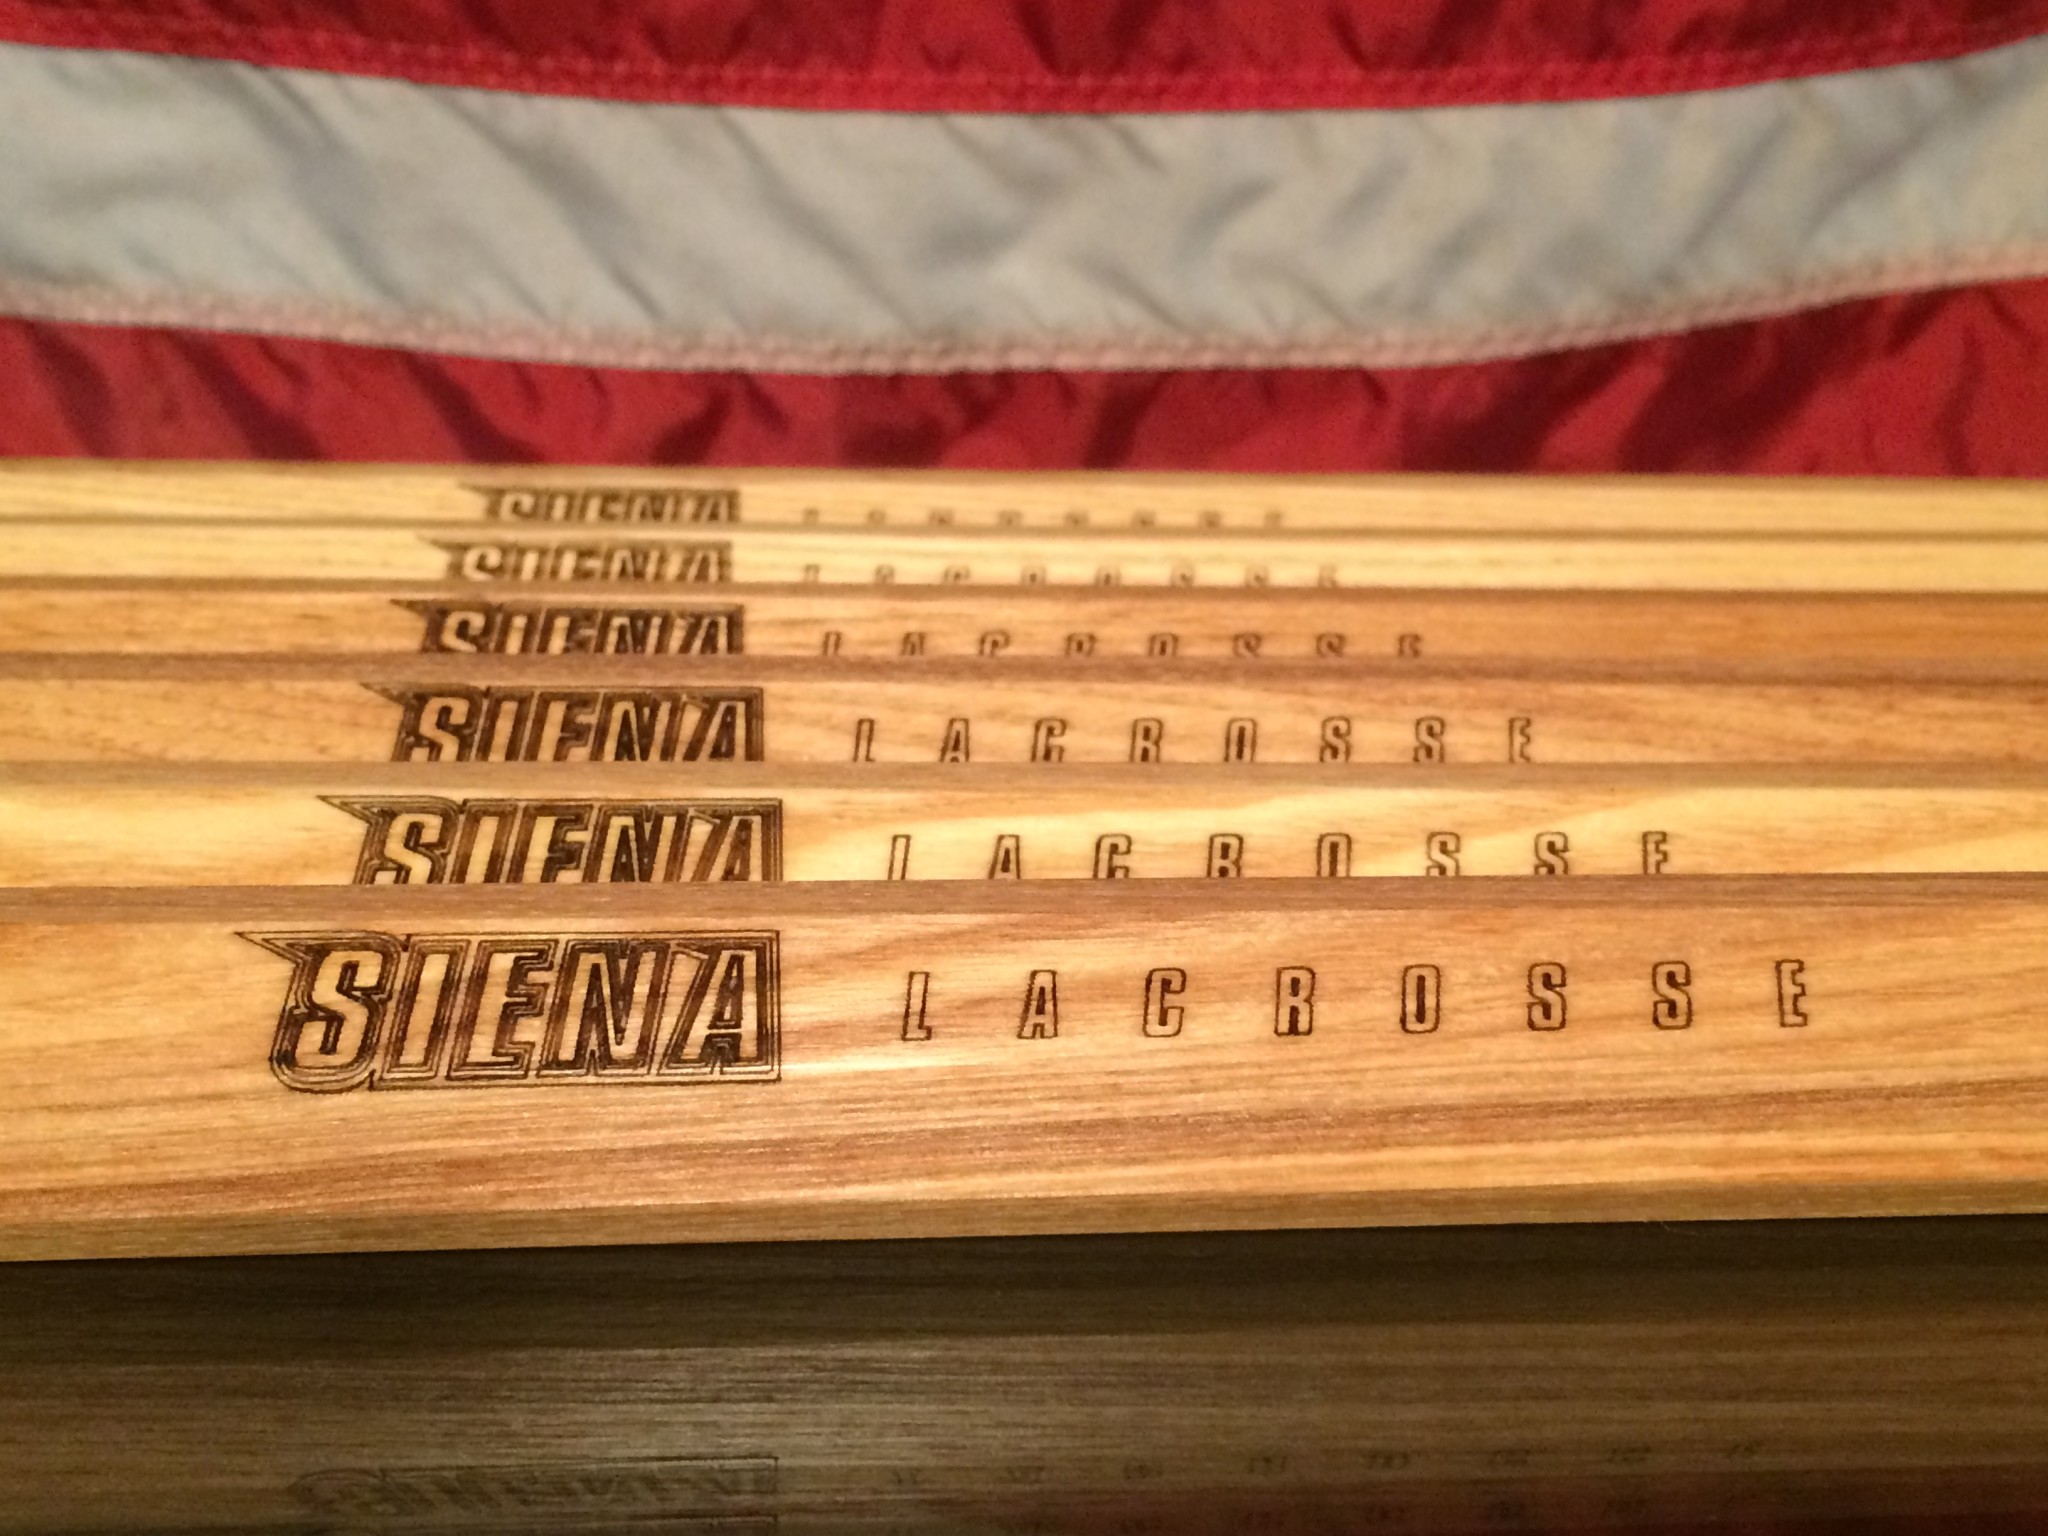 Handmade 11 Wooden Lacrosse Stick